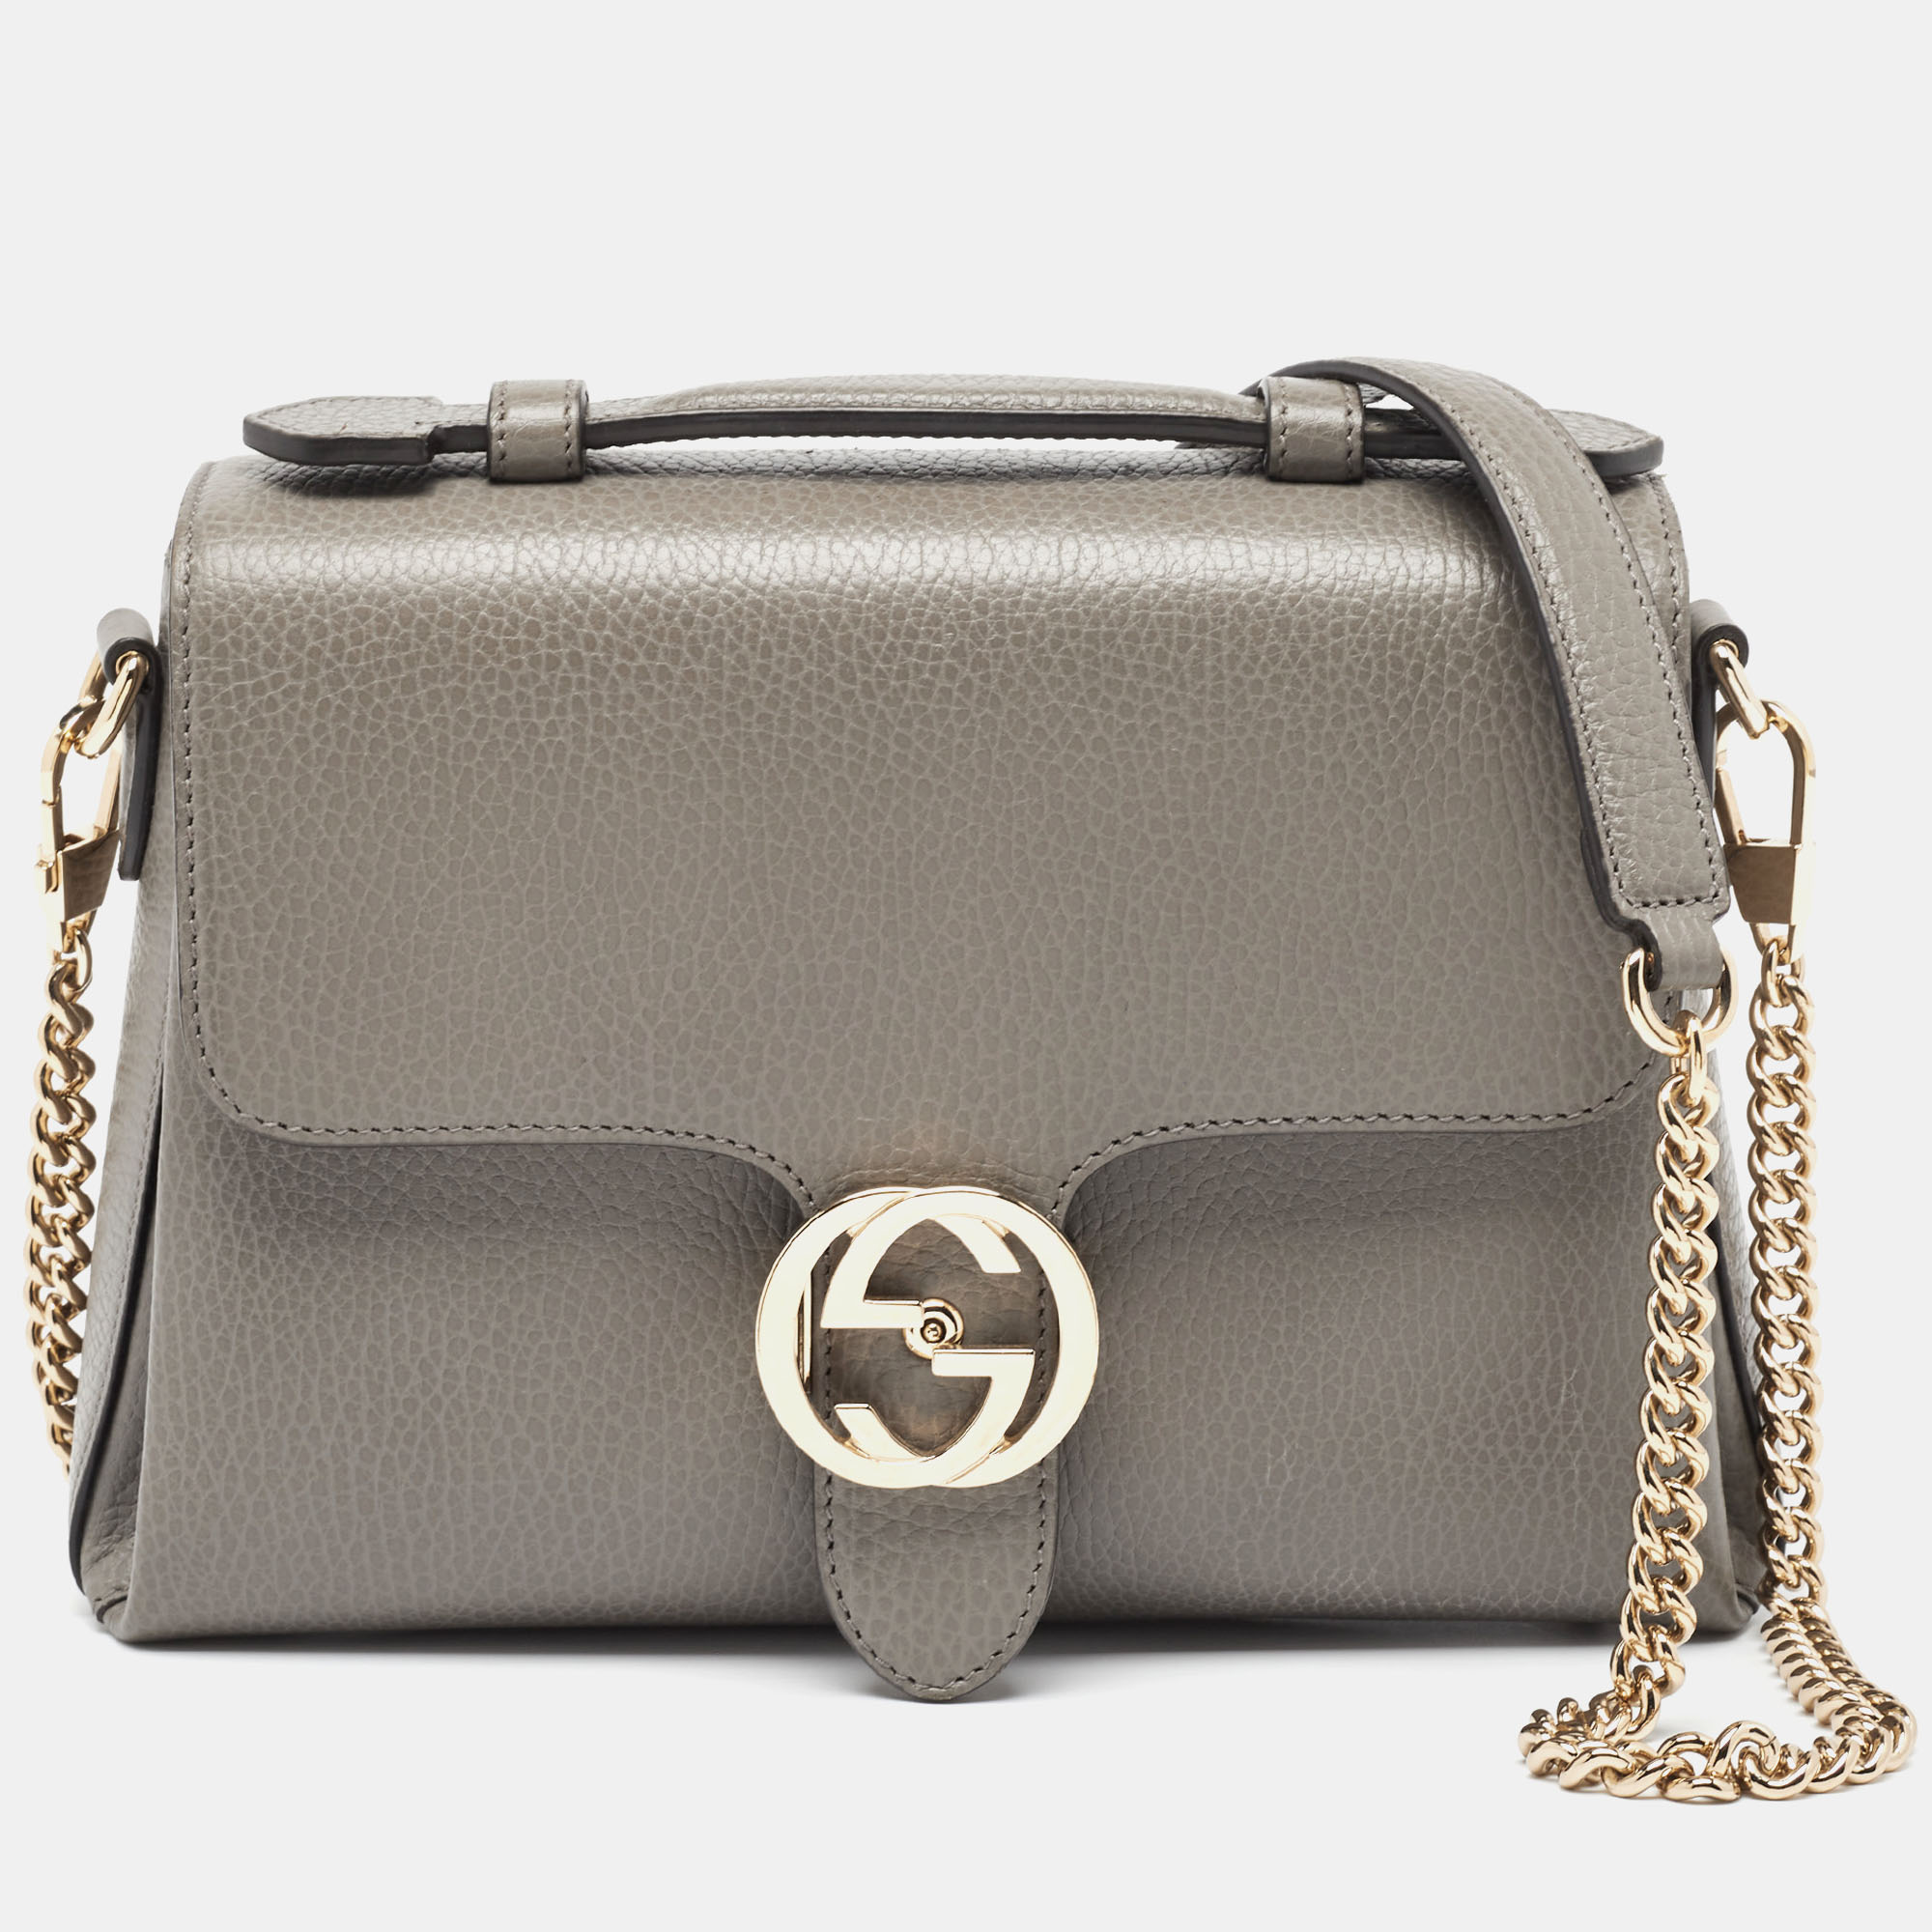 Gucci grey leather dollar interlocking g top handle bag